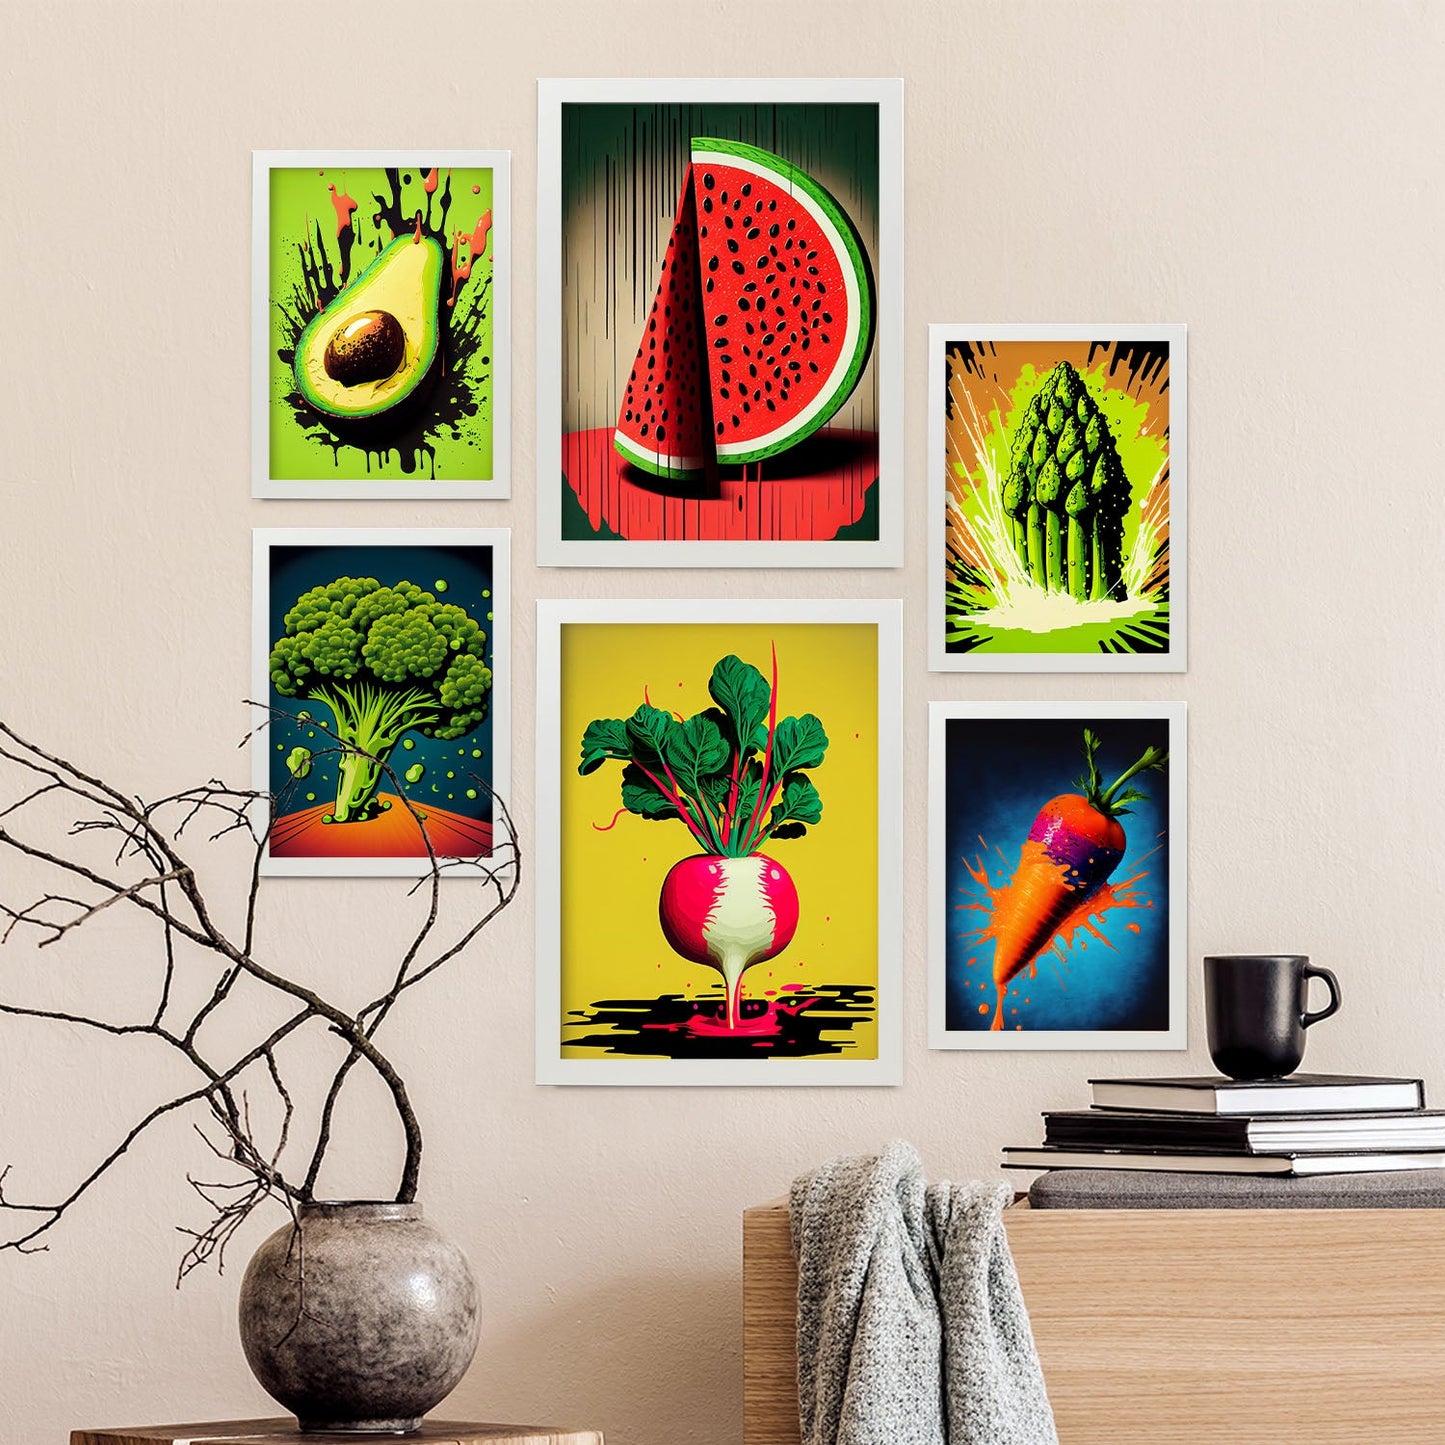 Nacnic Pop Art Vegtables Set_1. Aesthetic Wall Art Prints for Bedroom or Living Room Design.